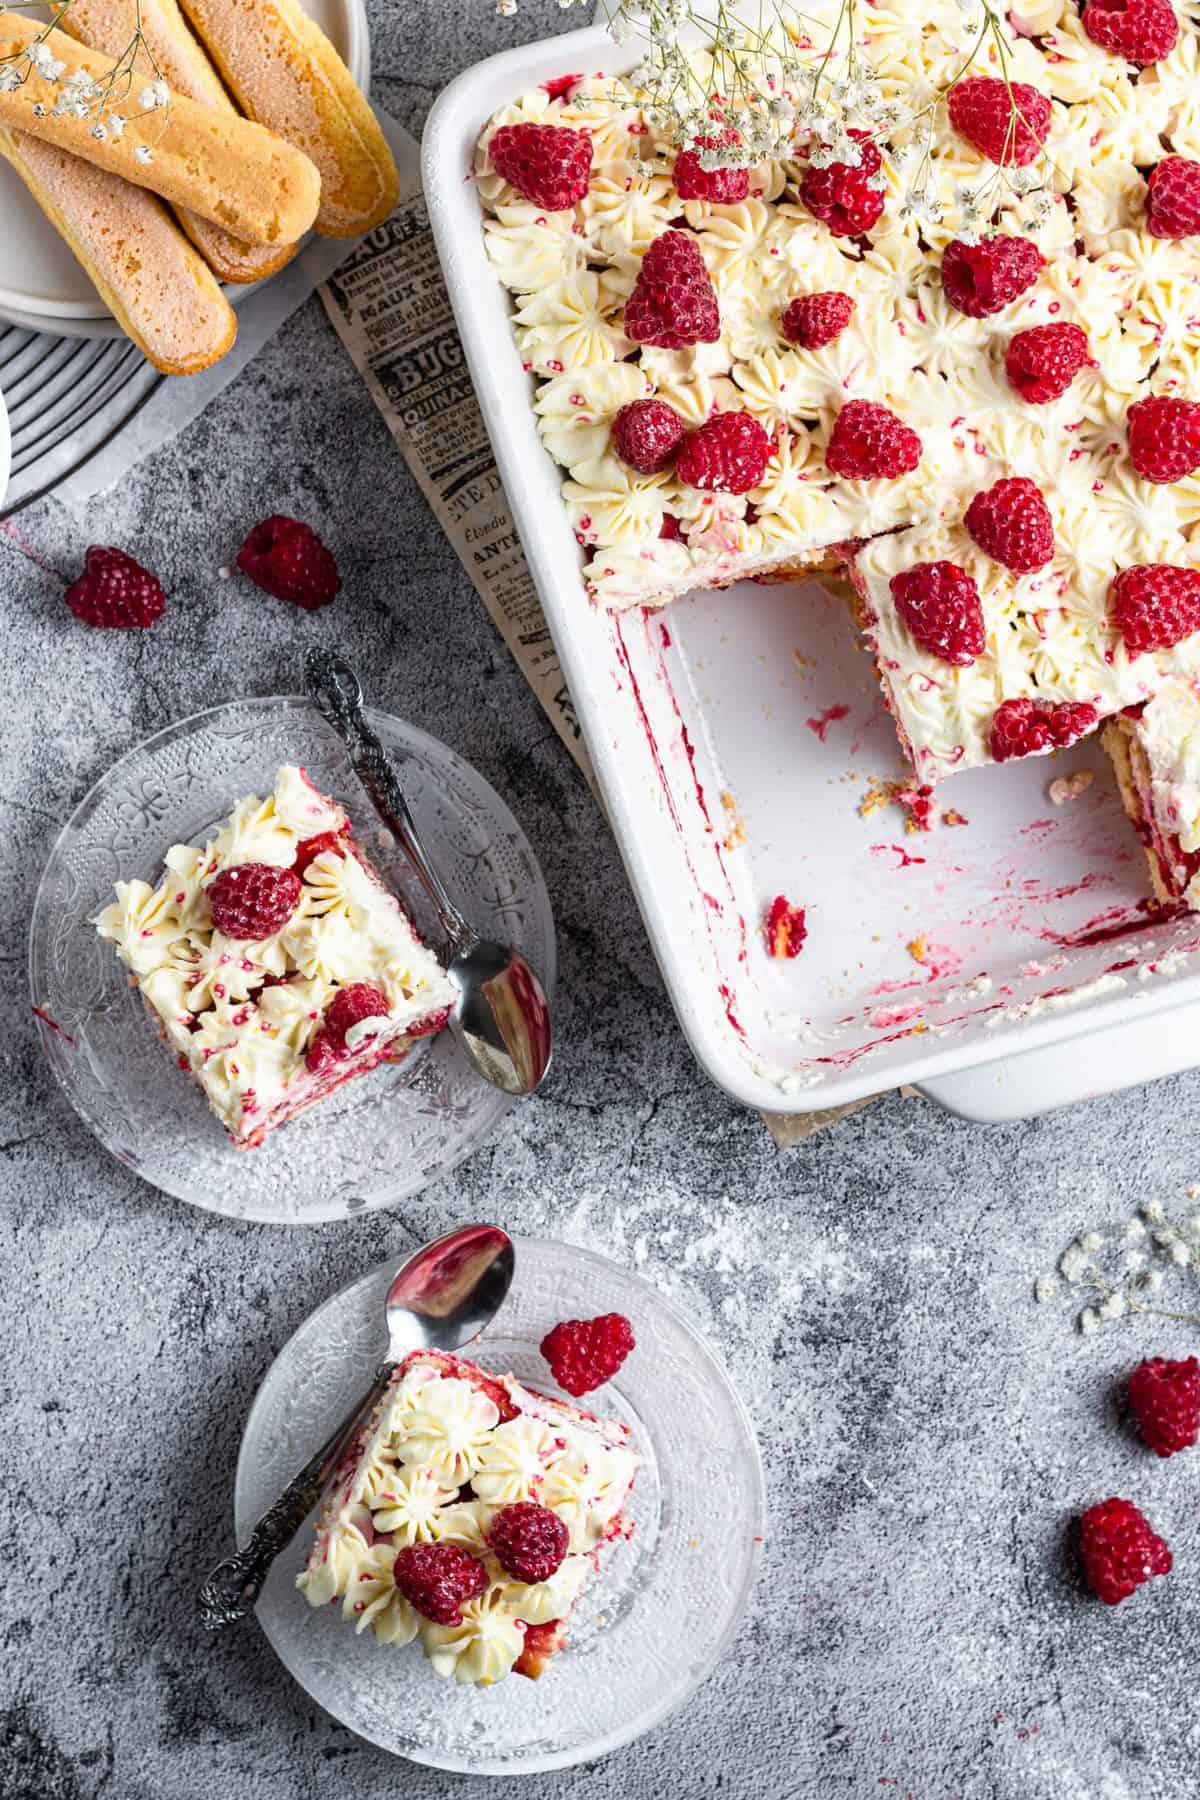 up close photo of slices of tiramisu with raspberries on top